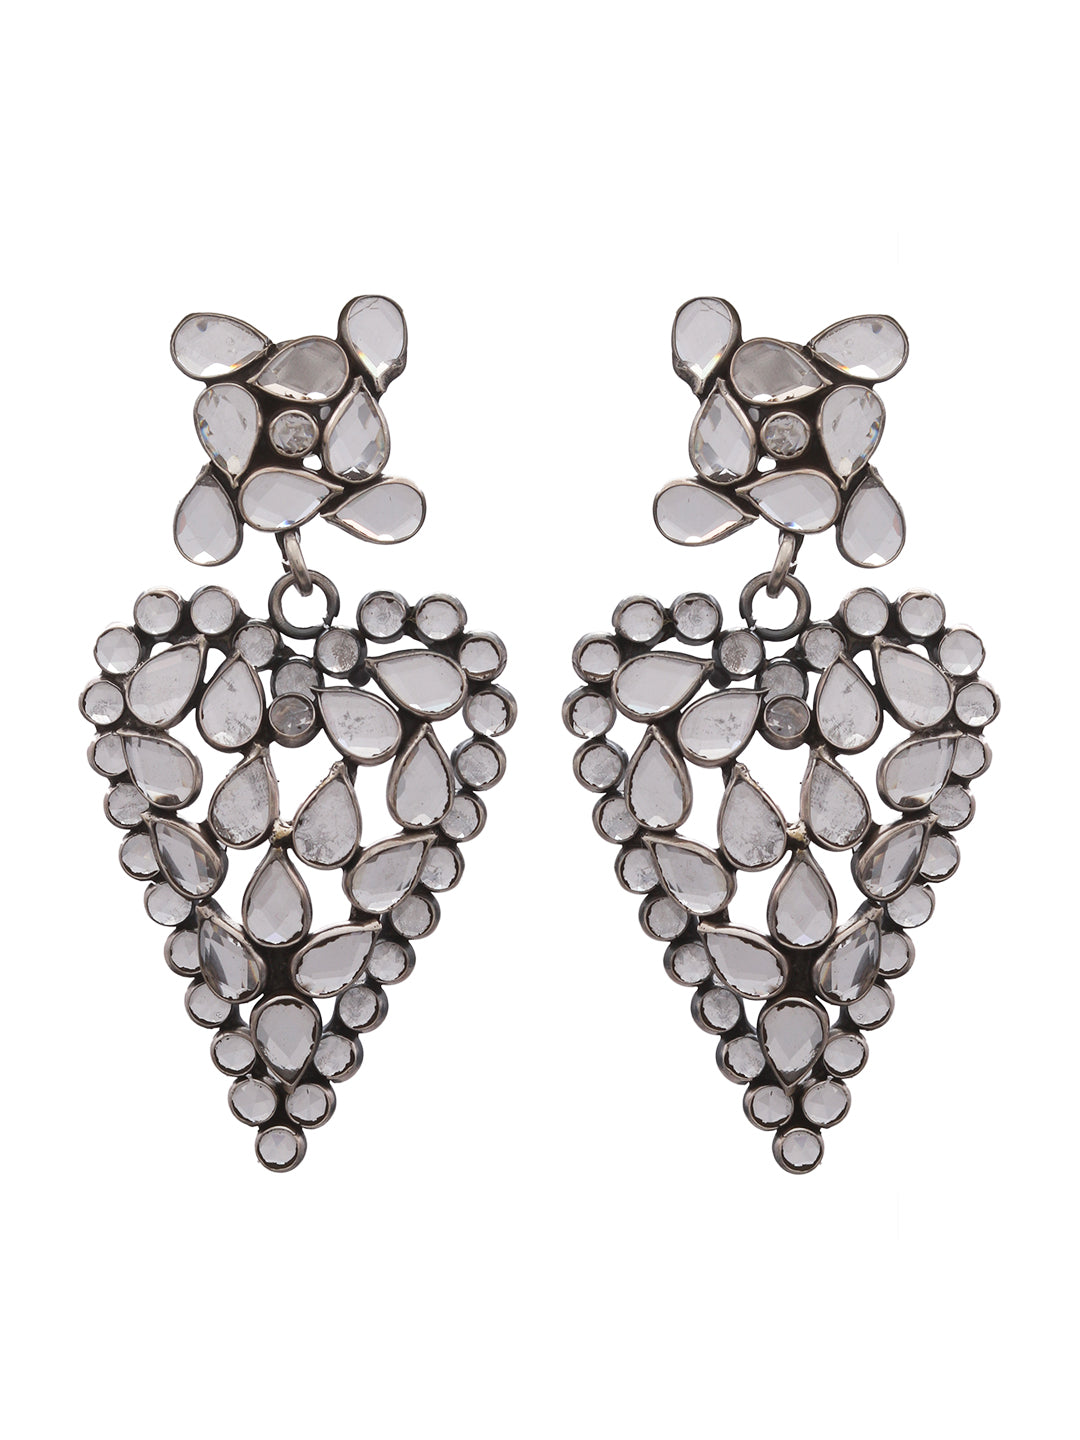 Sterling Silver Hollywood Earrings for Women Online